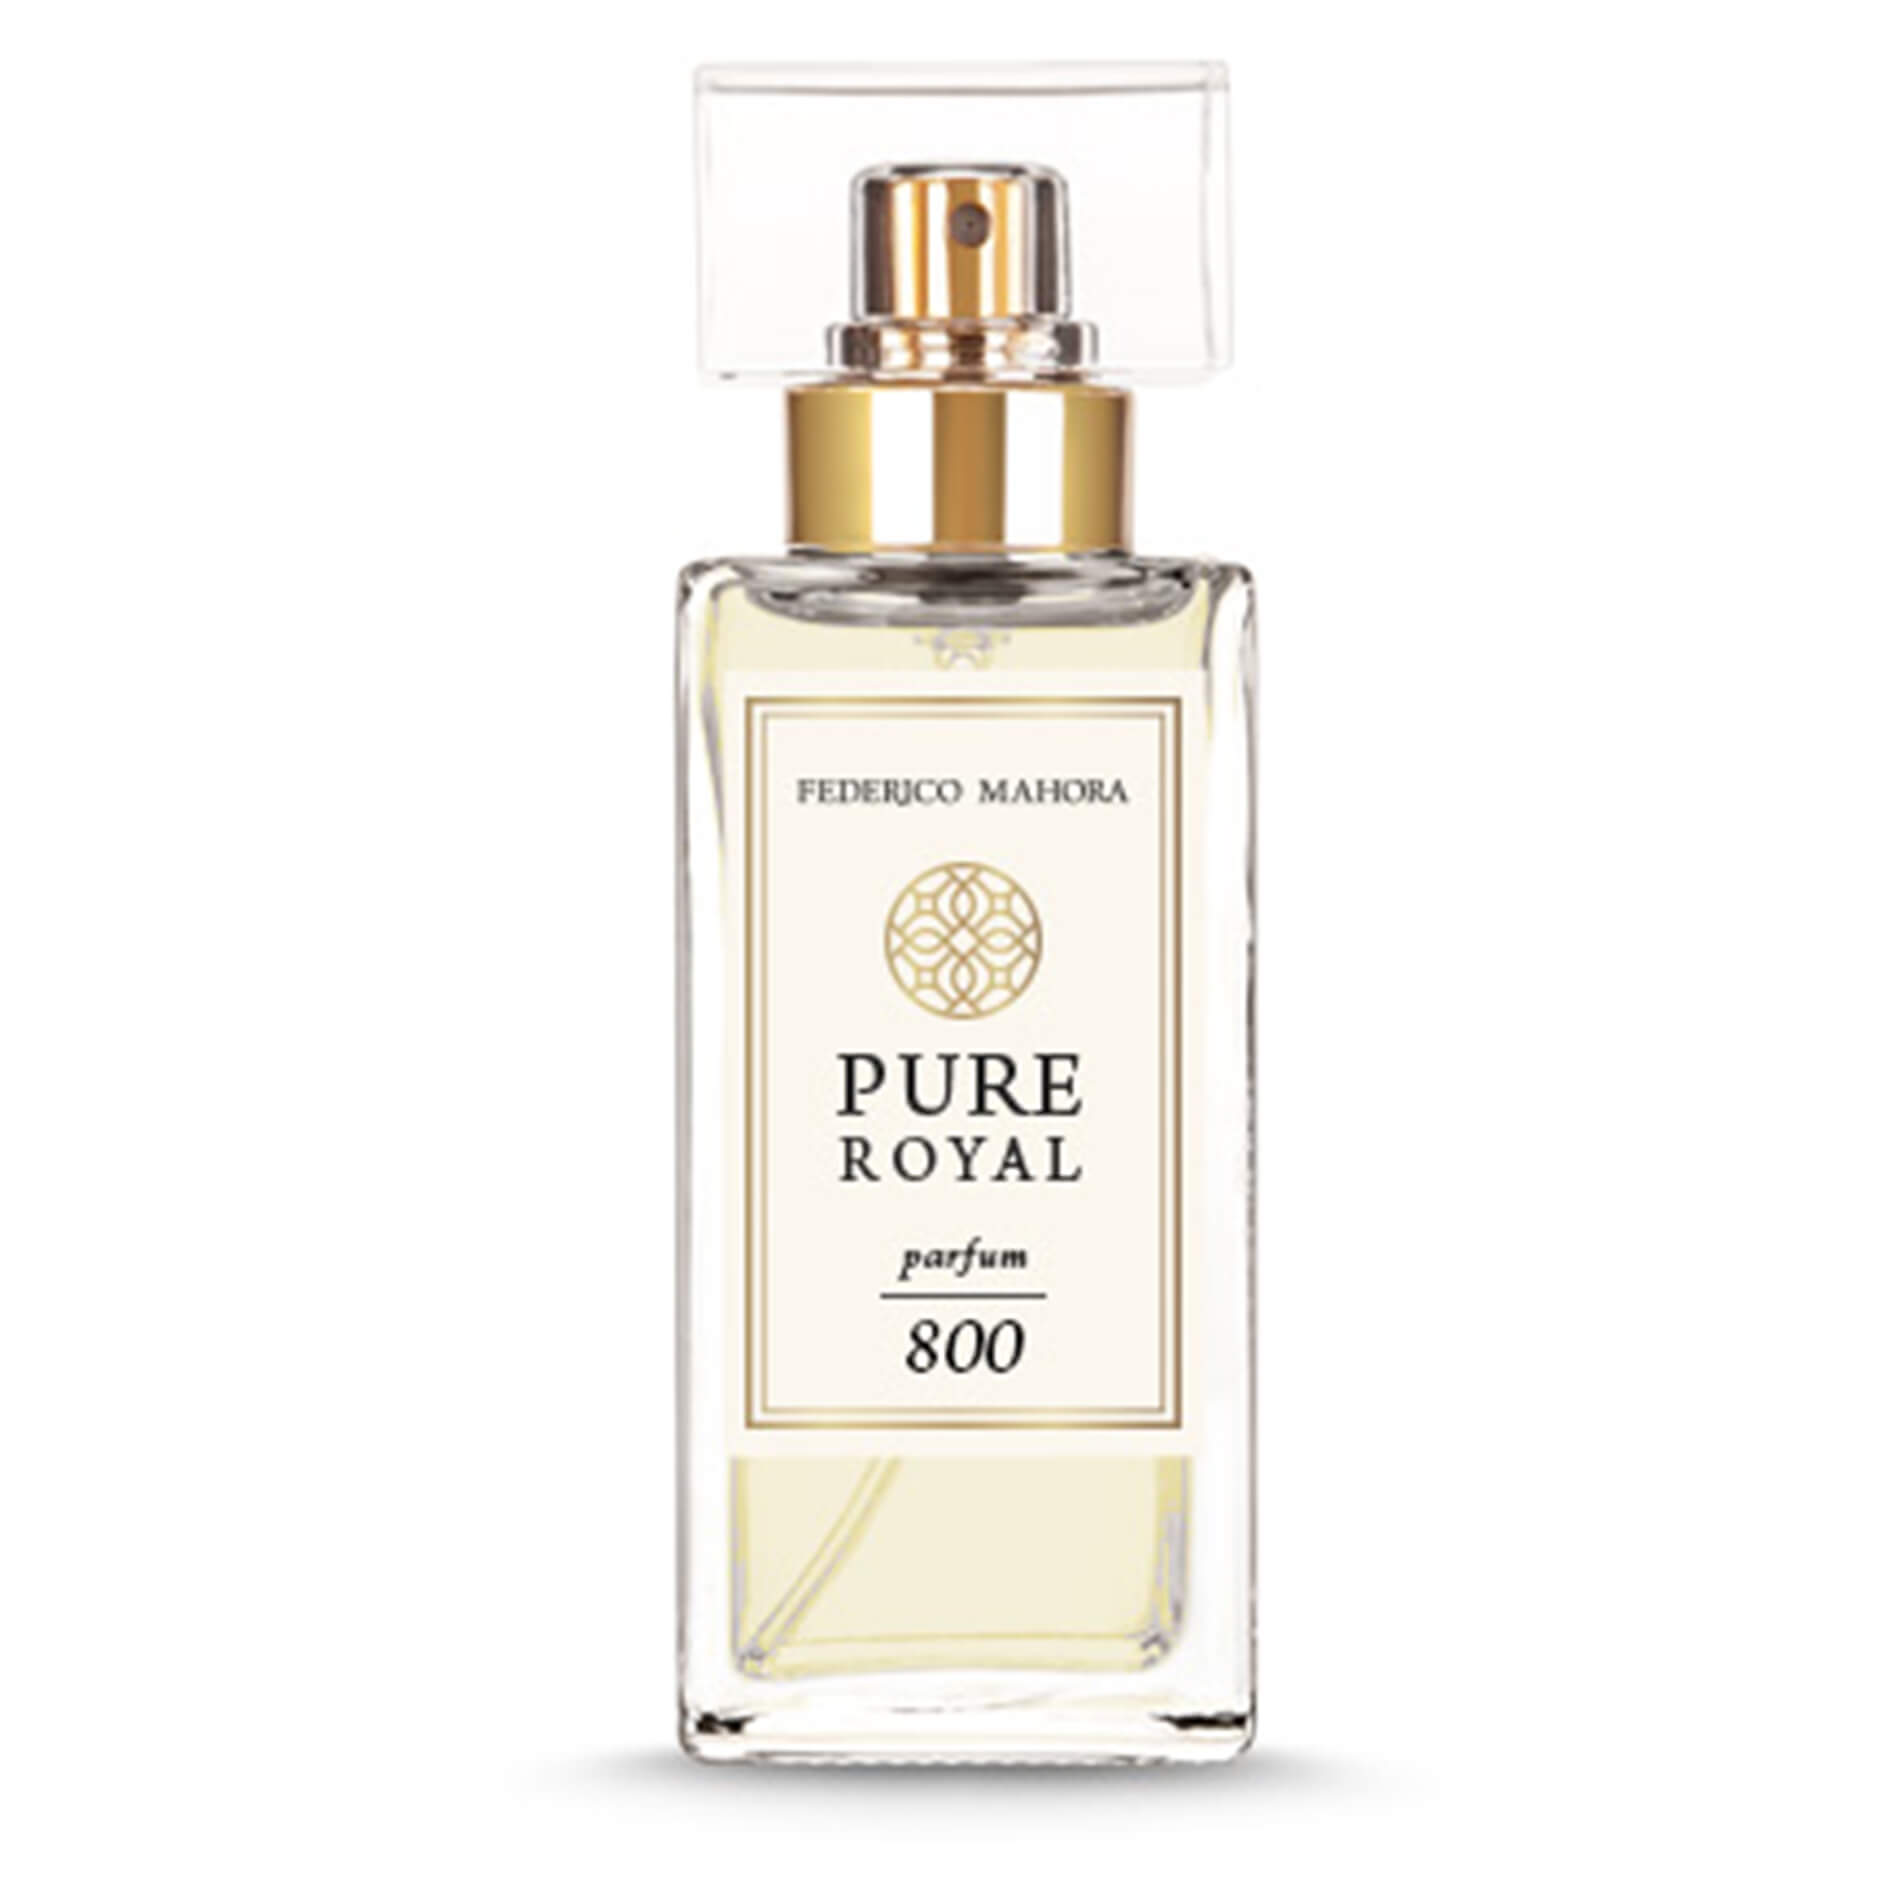 PURE ROYAL 800 Parfum by Federico Mahora